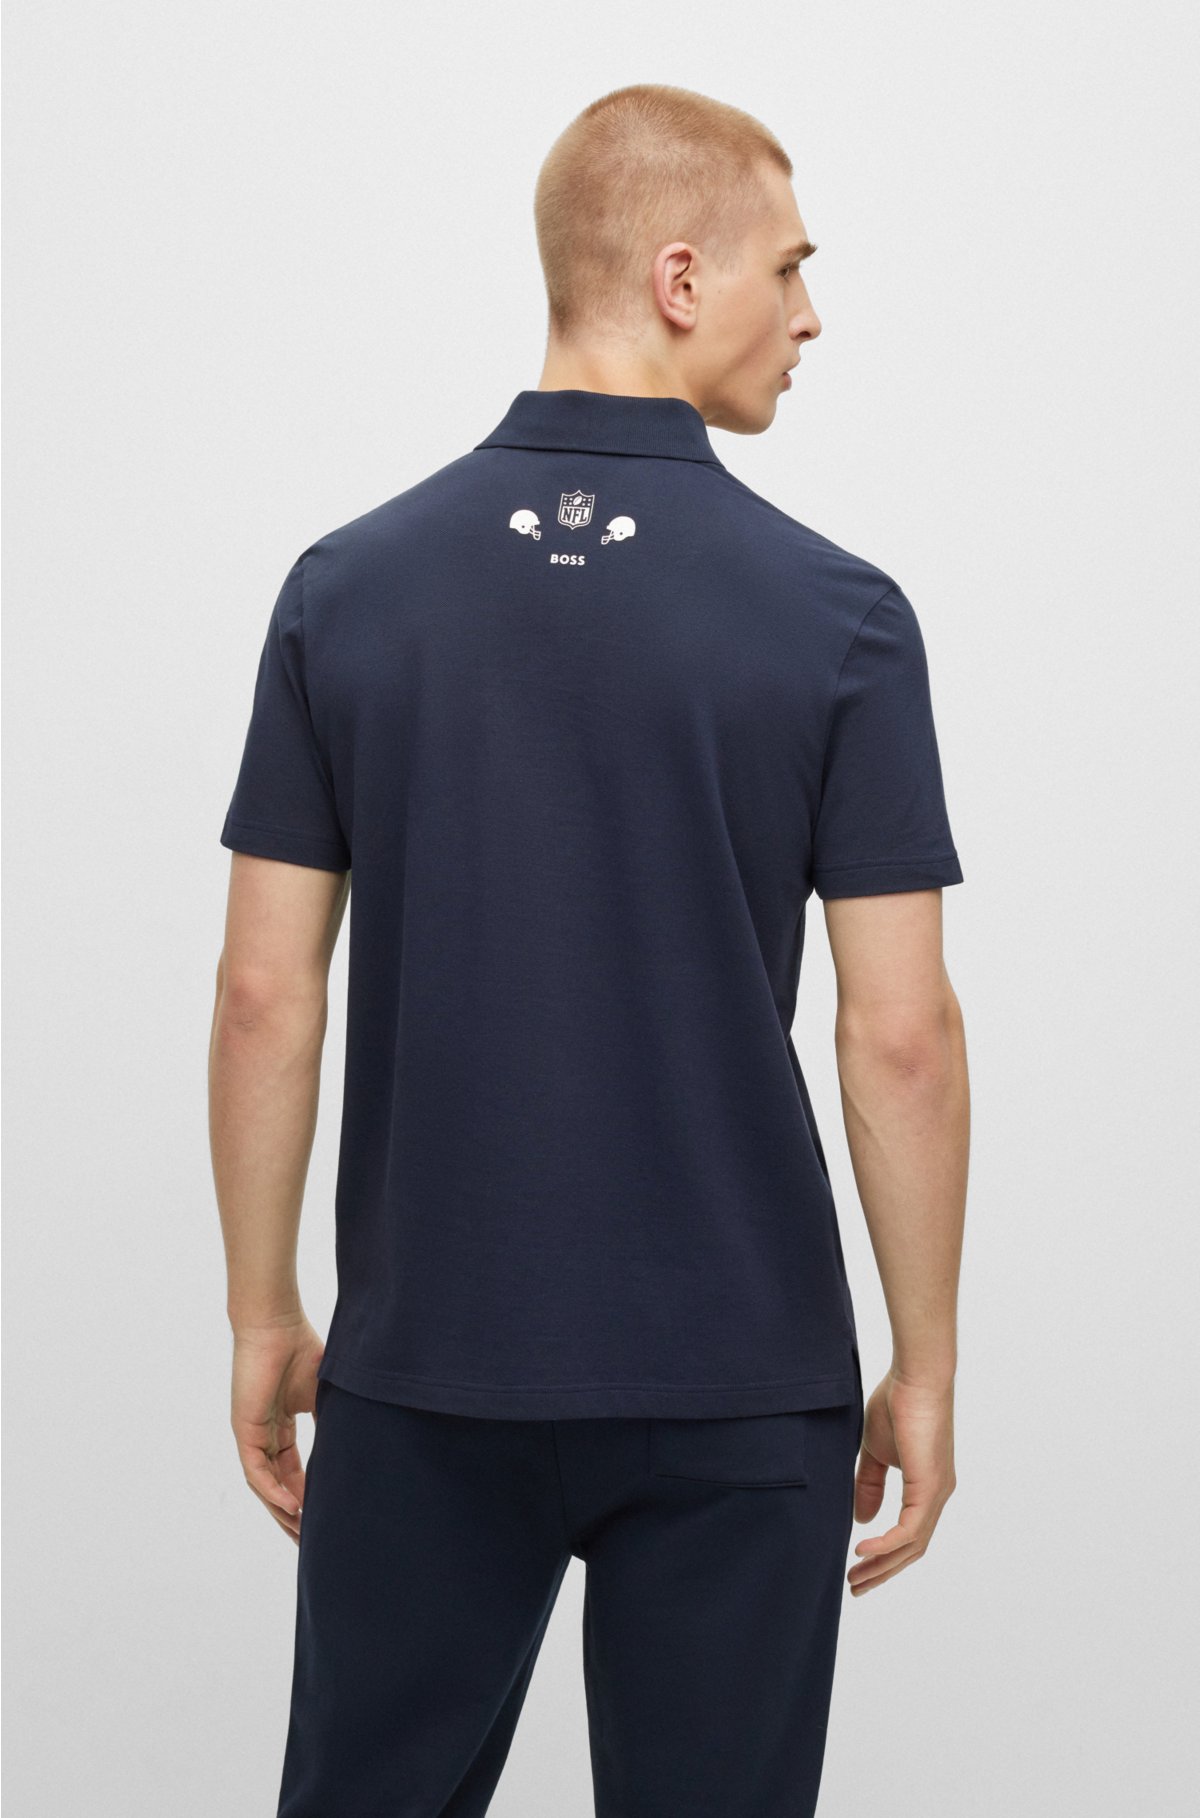 BOSS x NFL cotton-piqué polo shirt with collaborative branding, Cowboys